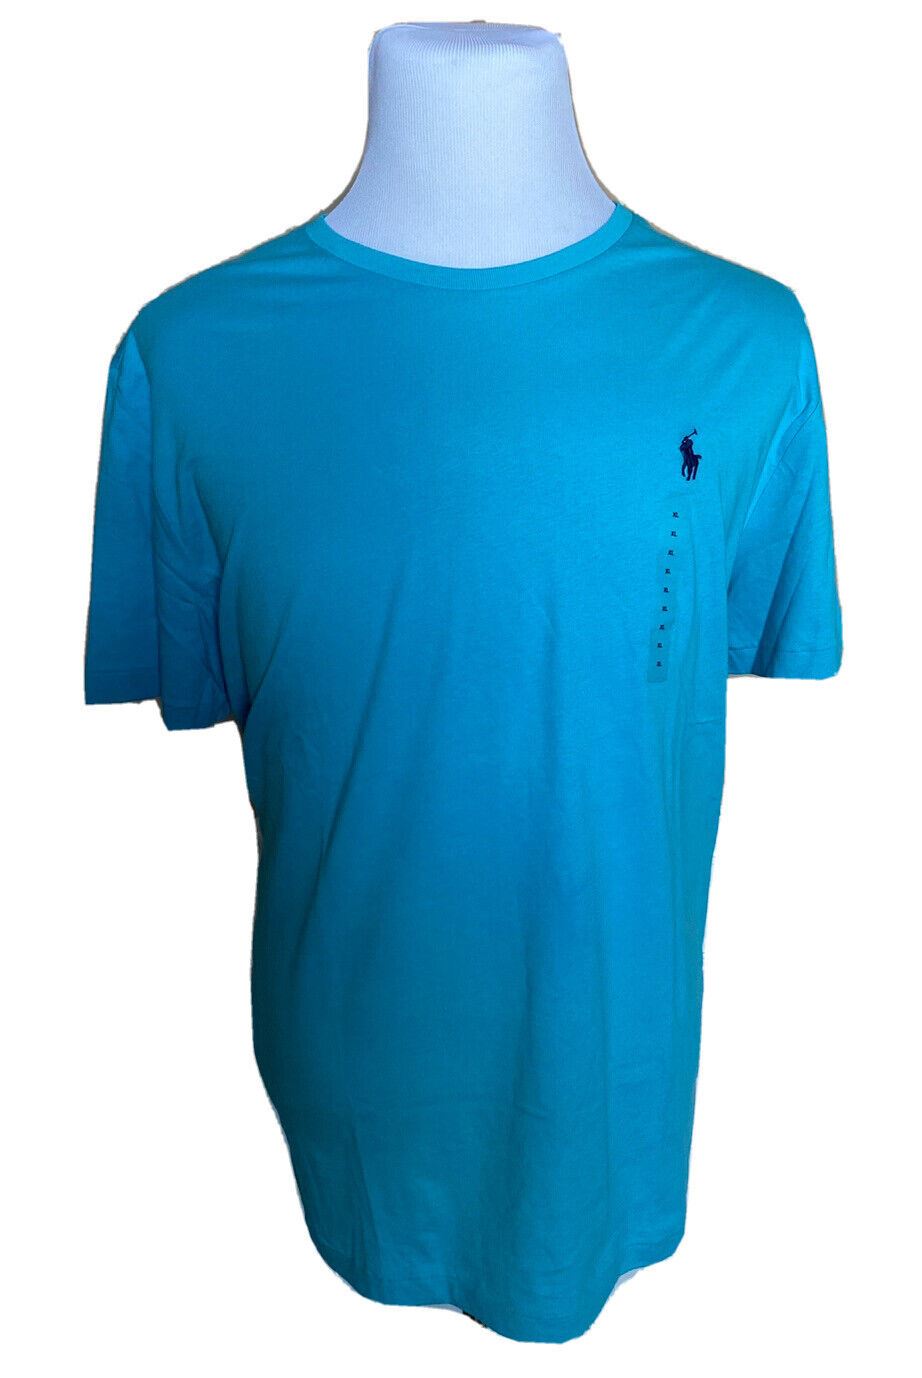 Хлопковая футболка с короткими рукавами NWT Polo Ralph Lauren, синяя, XL 